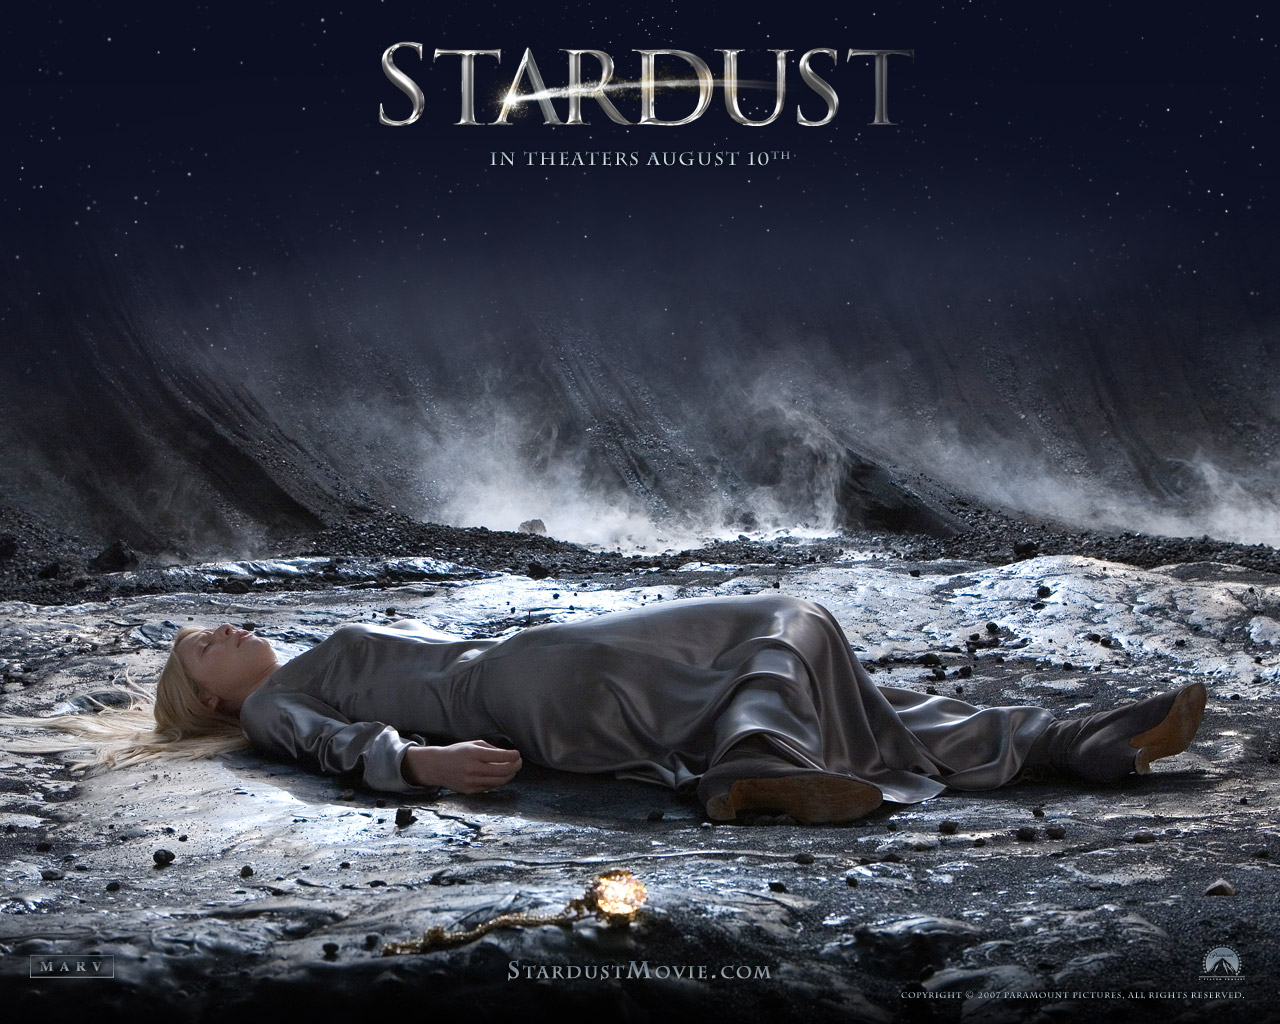 Claire Danes - Claire Danes in Stardust Wallpaper 3 800x600